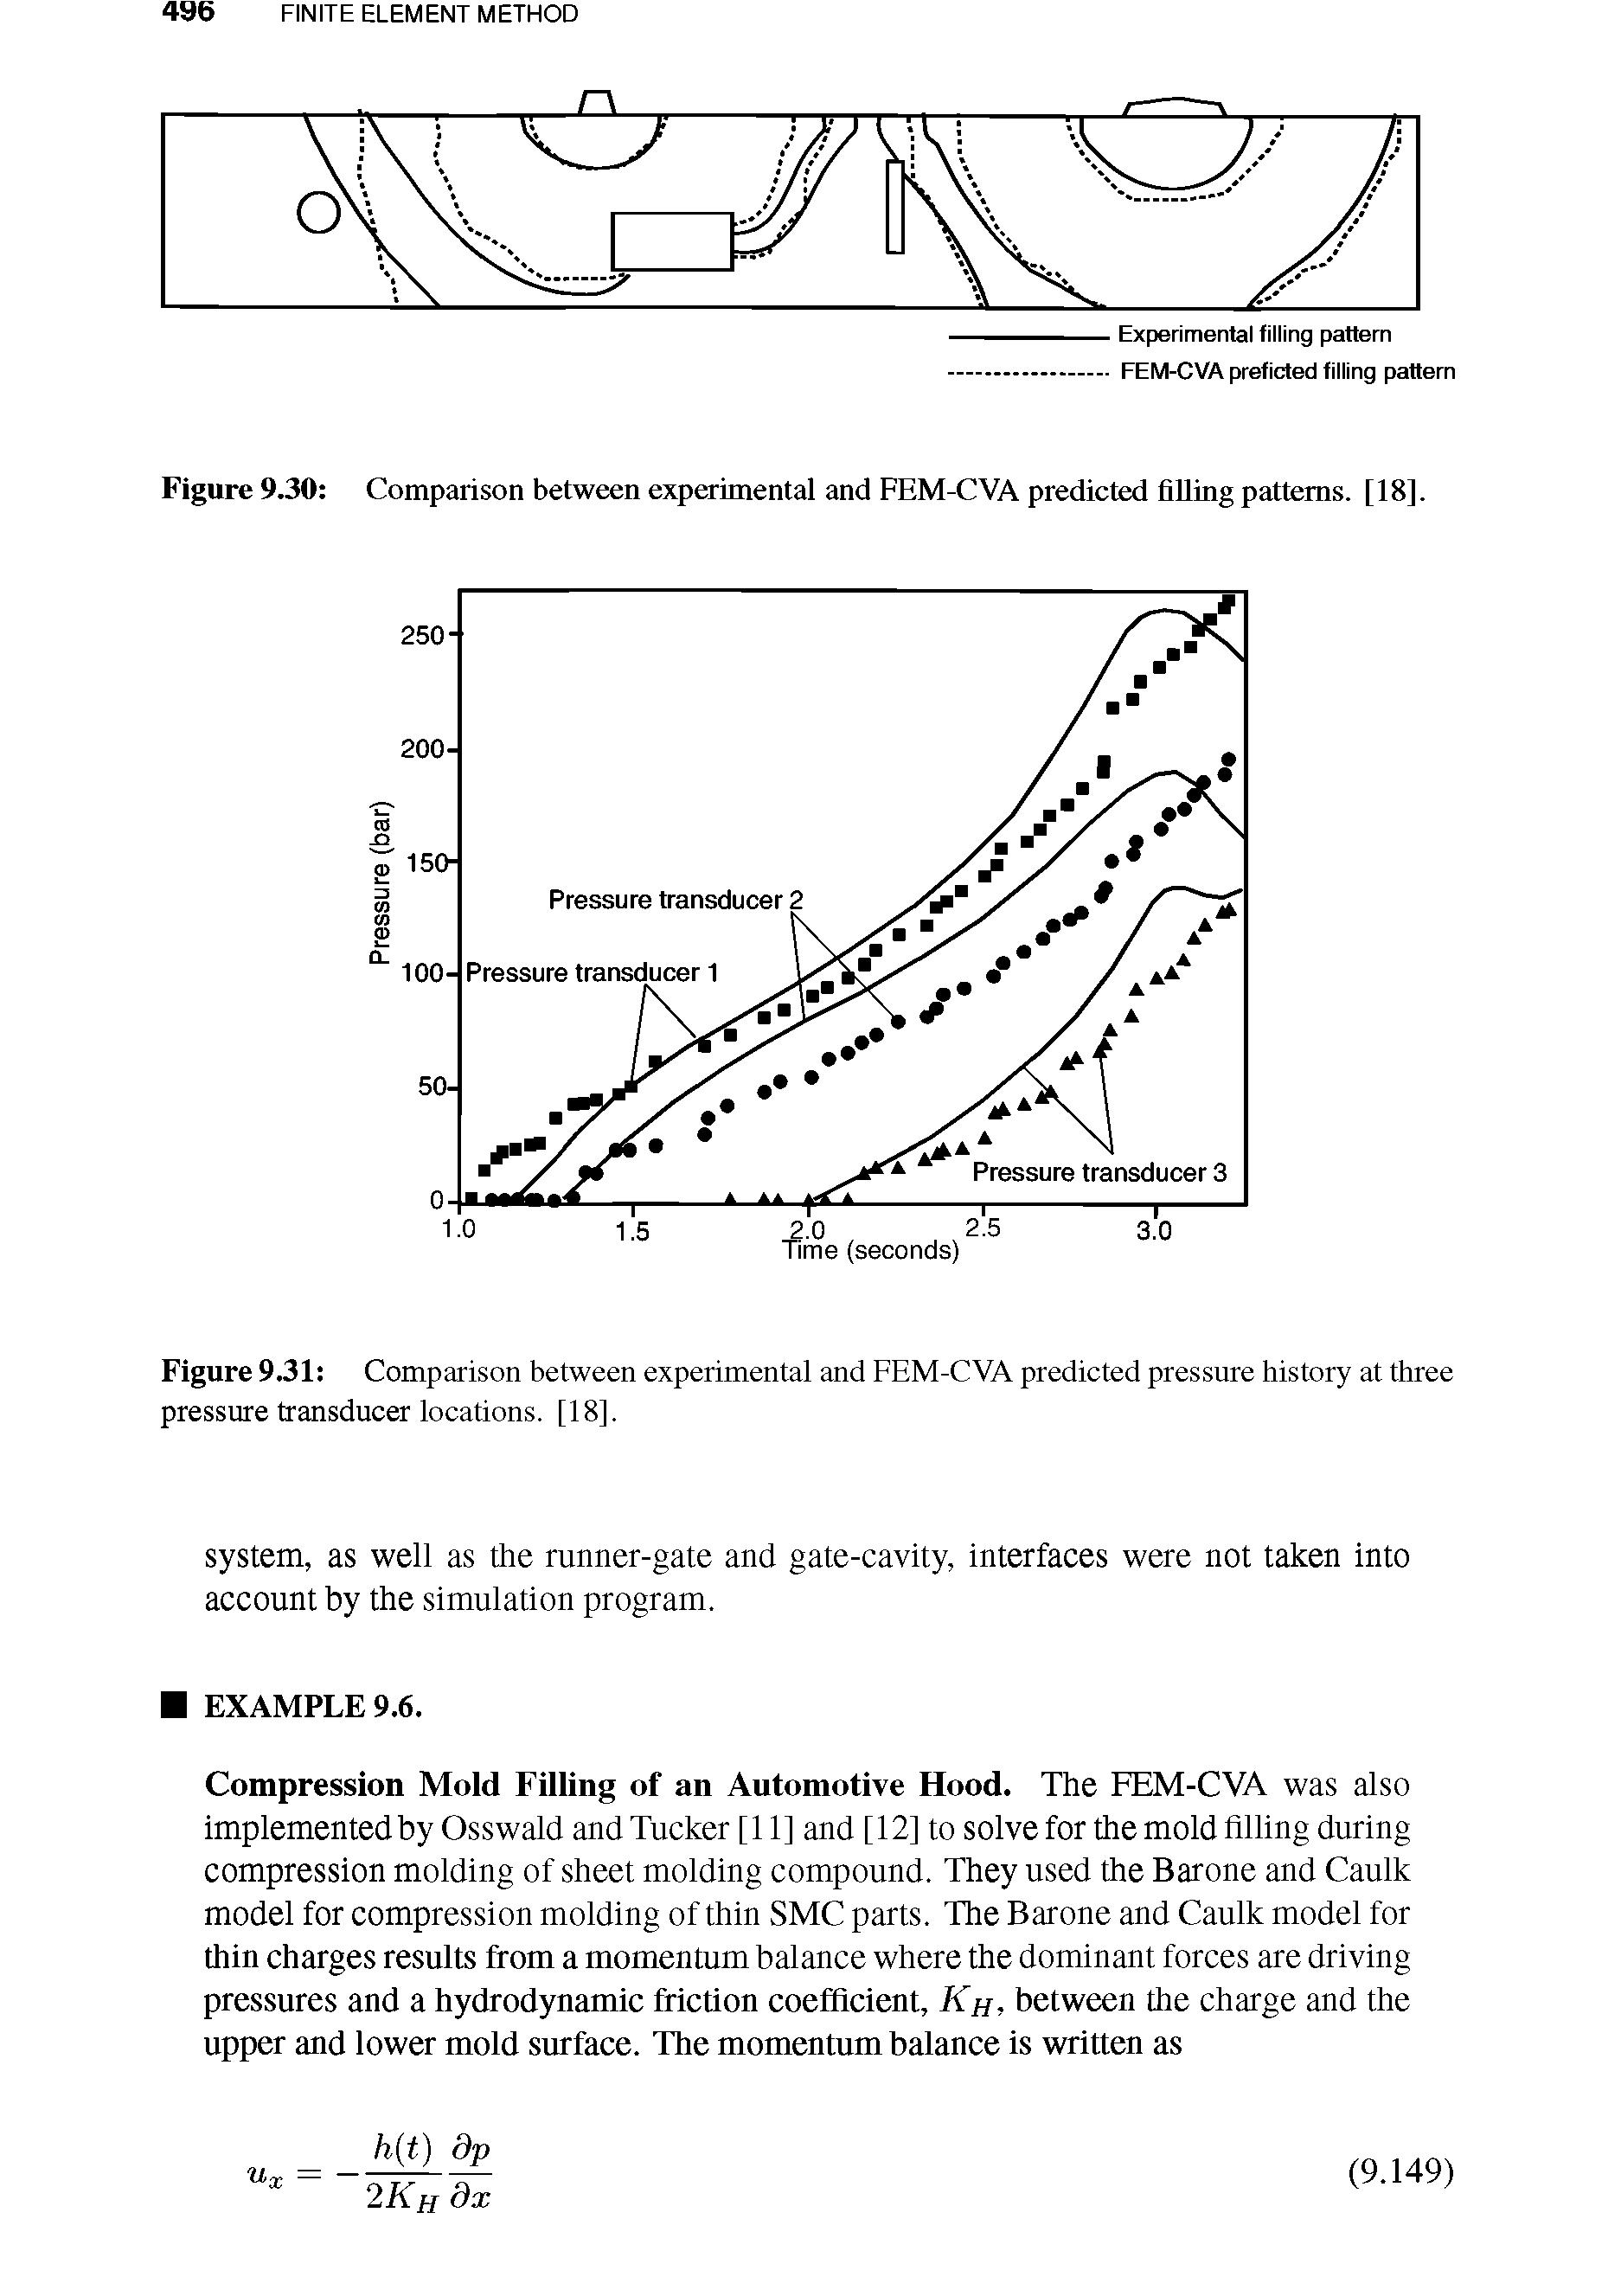 Figure 9.31 Comparison between experimental and FEM-CVA predicted pressure history at three pressure transducer locations. [18].